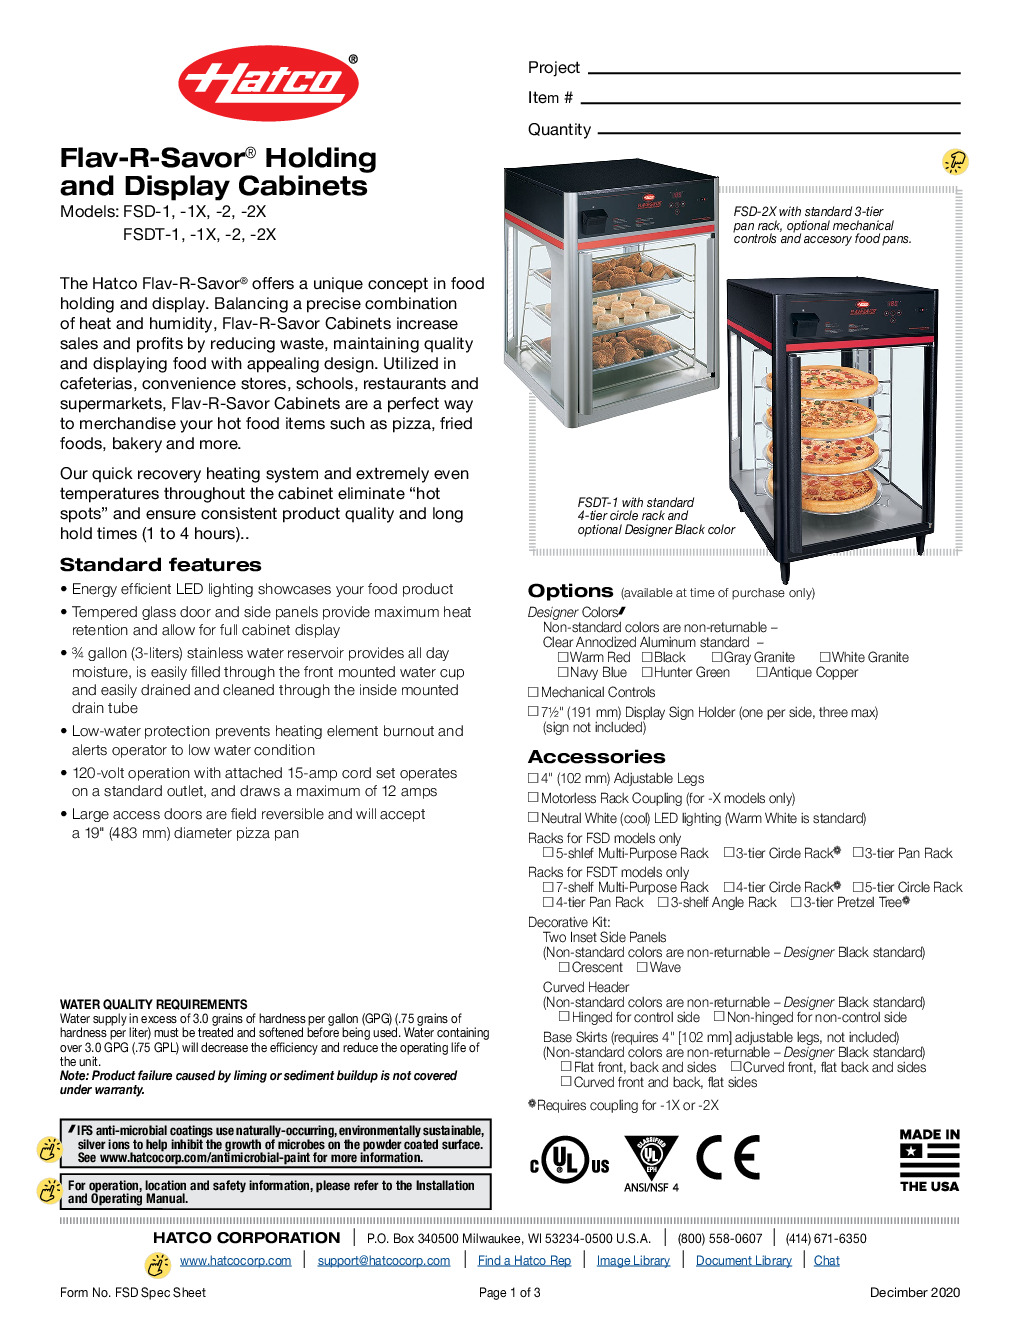 Hatco FSD-2 Countertop Hot Food Display Case